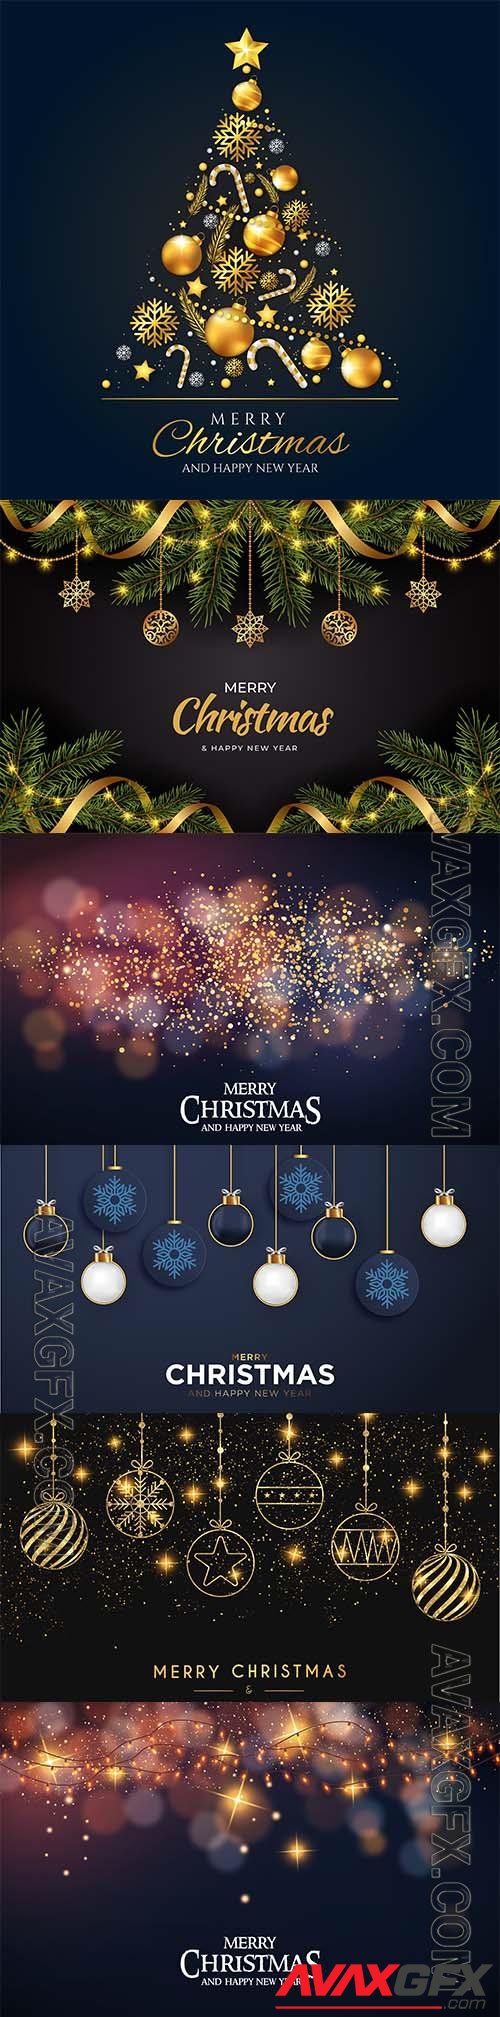 Elegant merry christmas vector background with golden balls